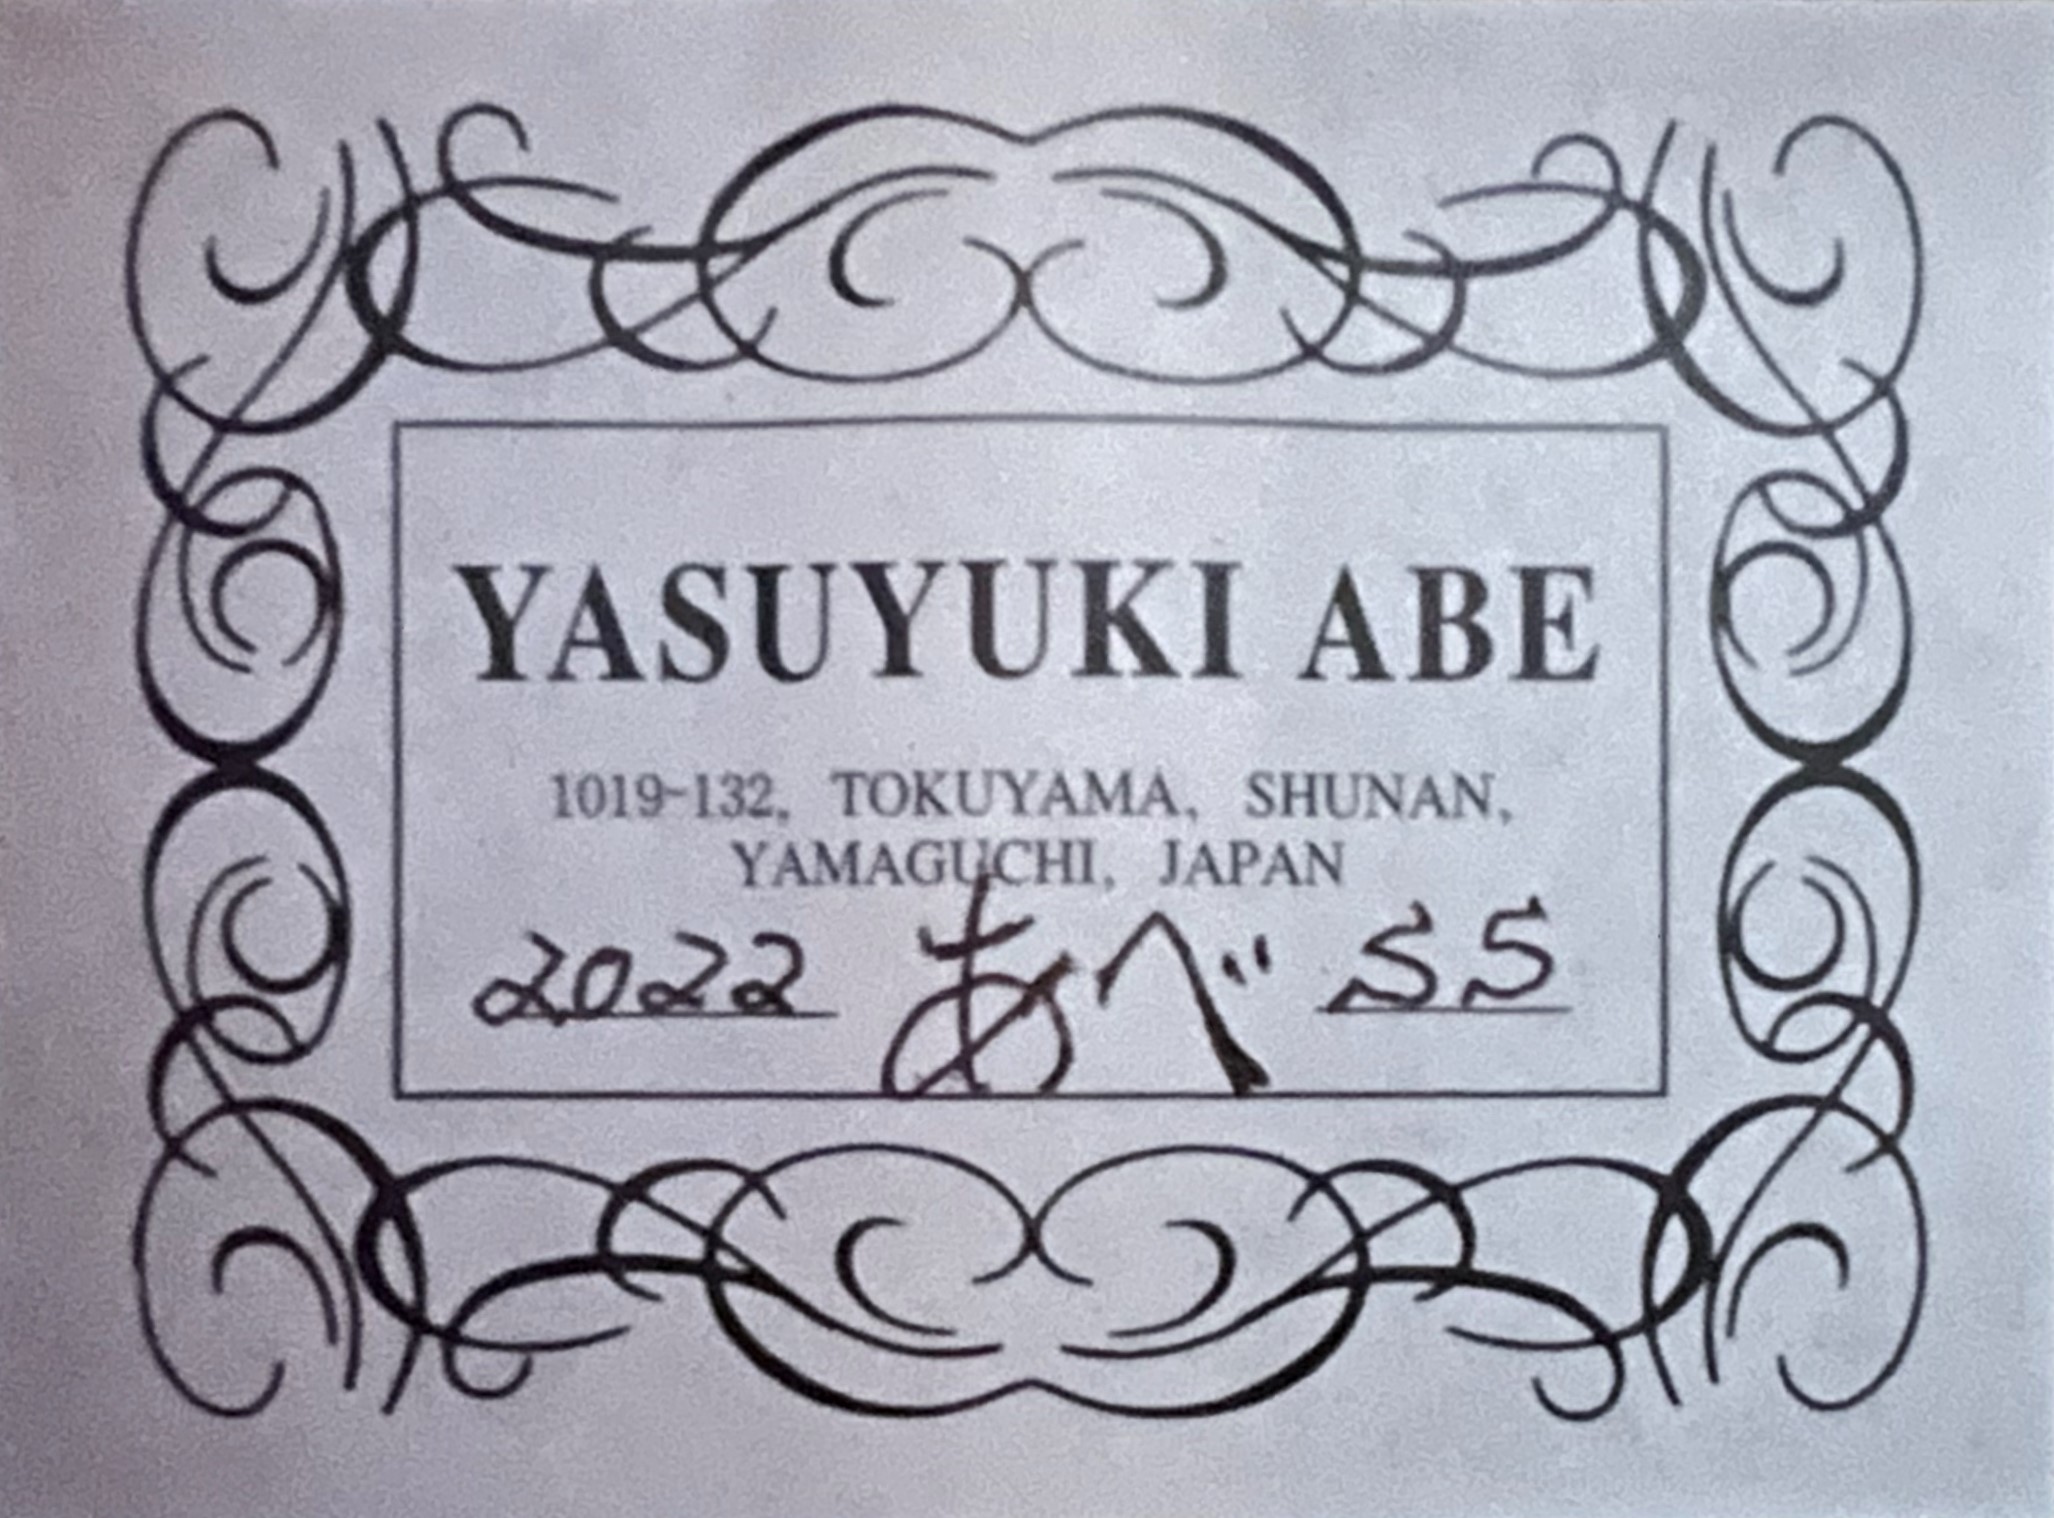 Yasuyuki Abe 640